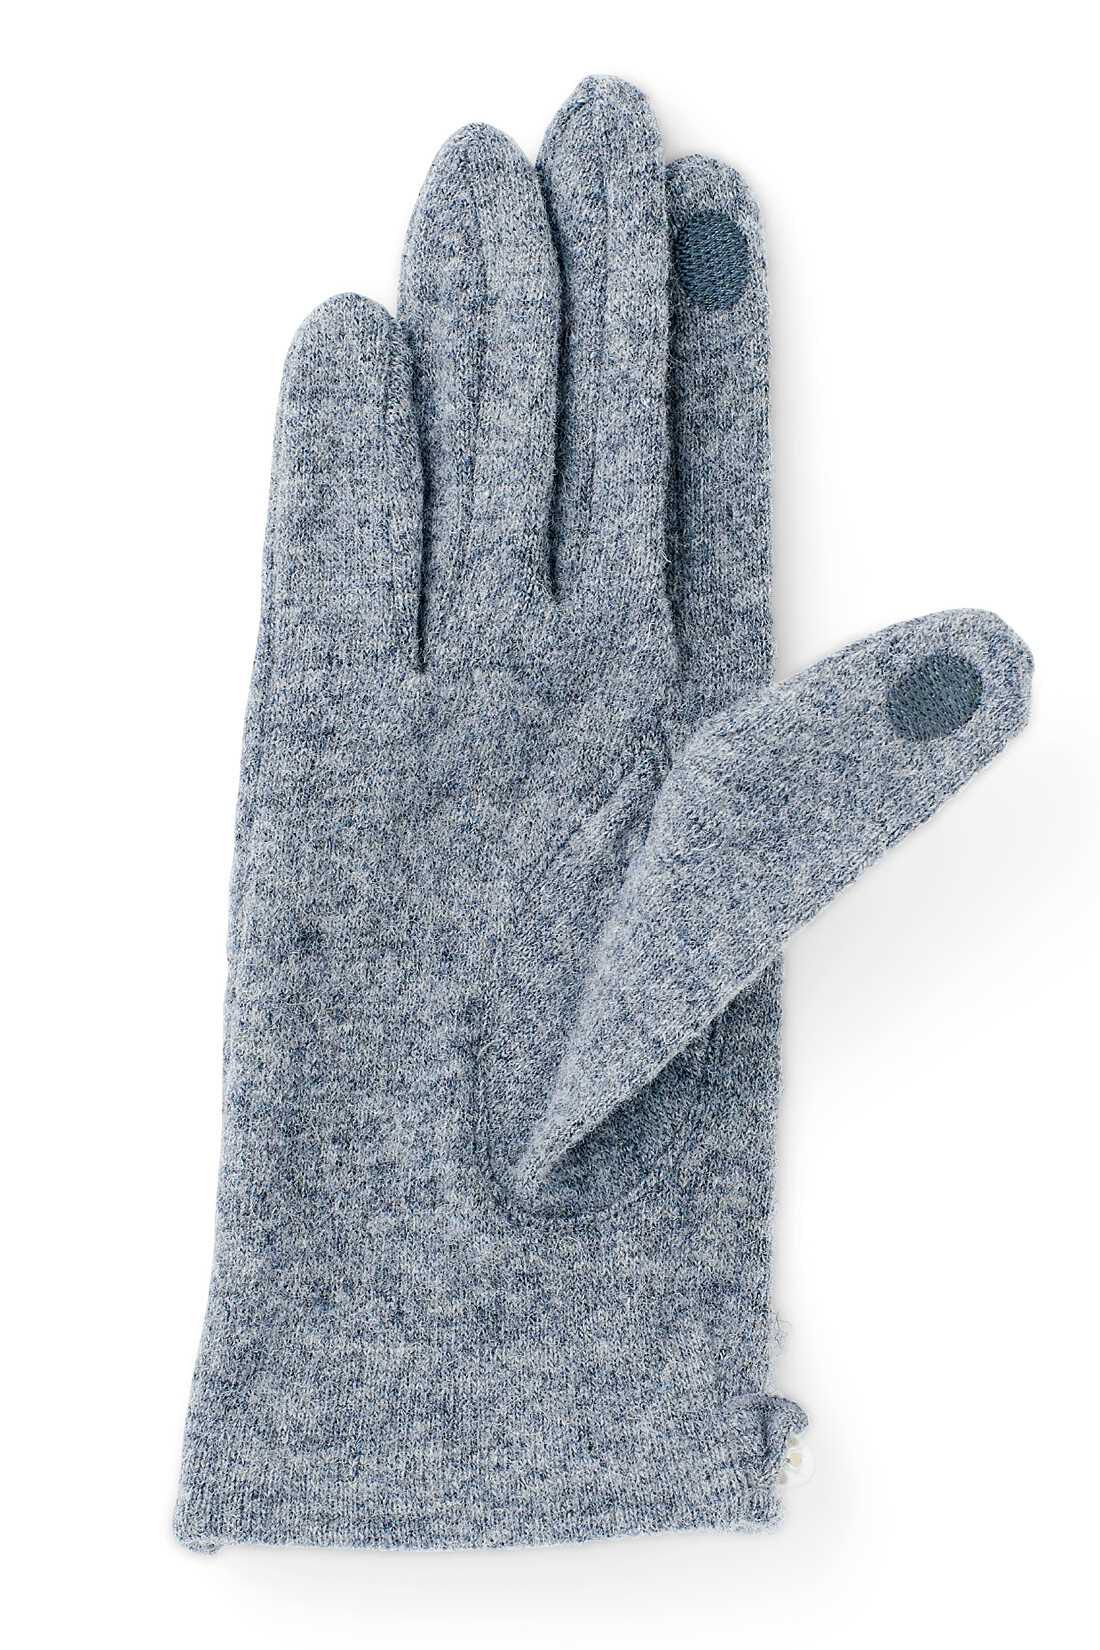 DRECO by IEDIT|DRECOバイヤーズセレクト　タッチパネル対応パール付手袋〈ブラック〉|※お届けするカラーとは異なります。